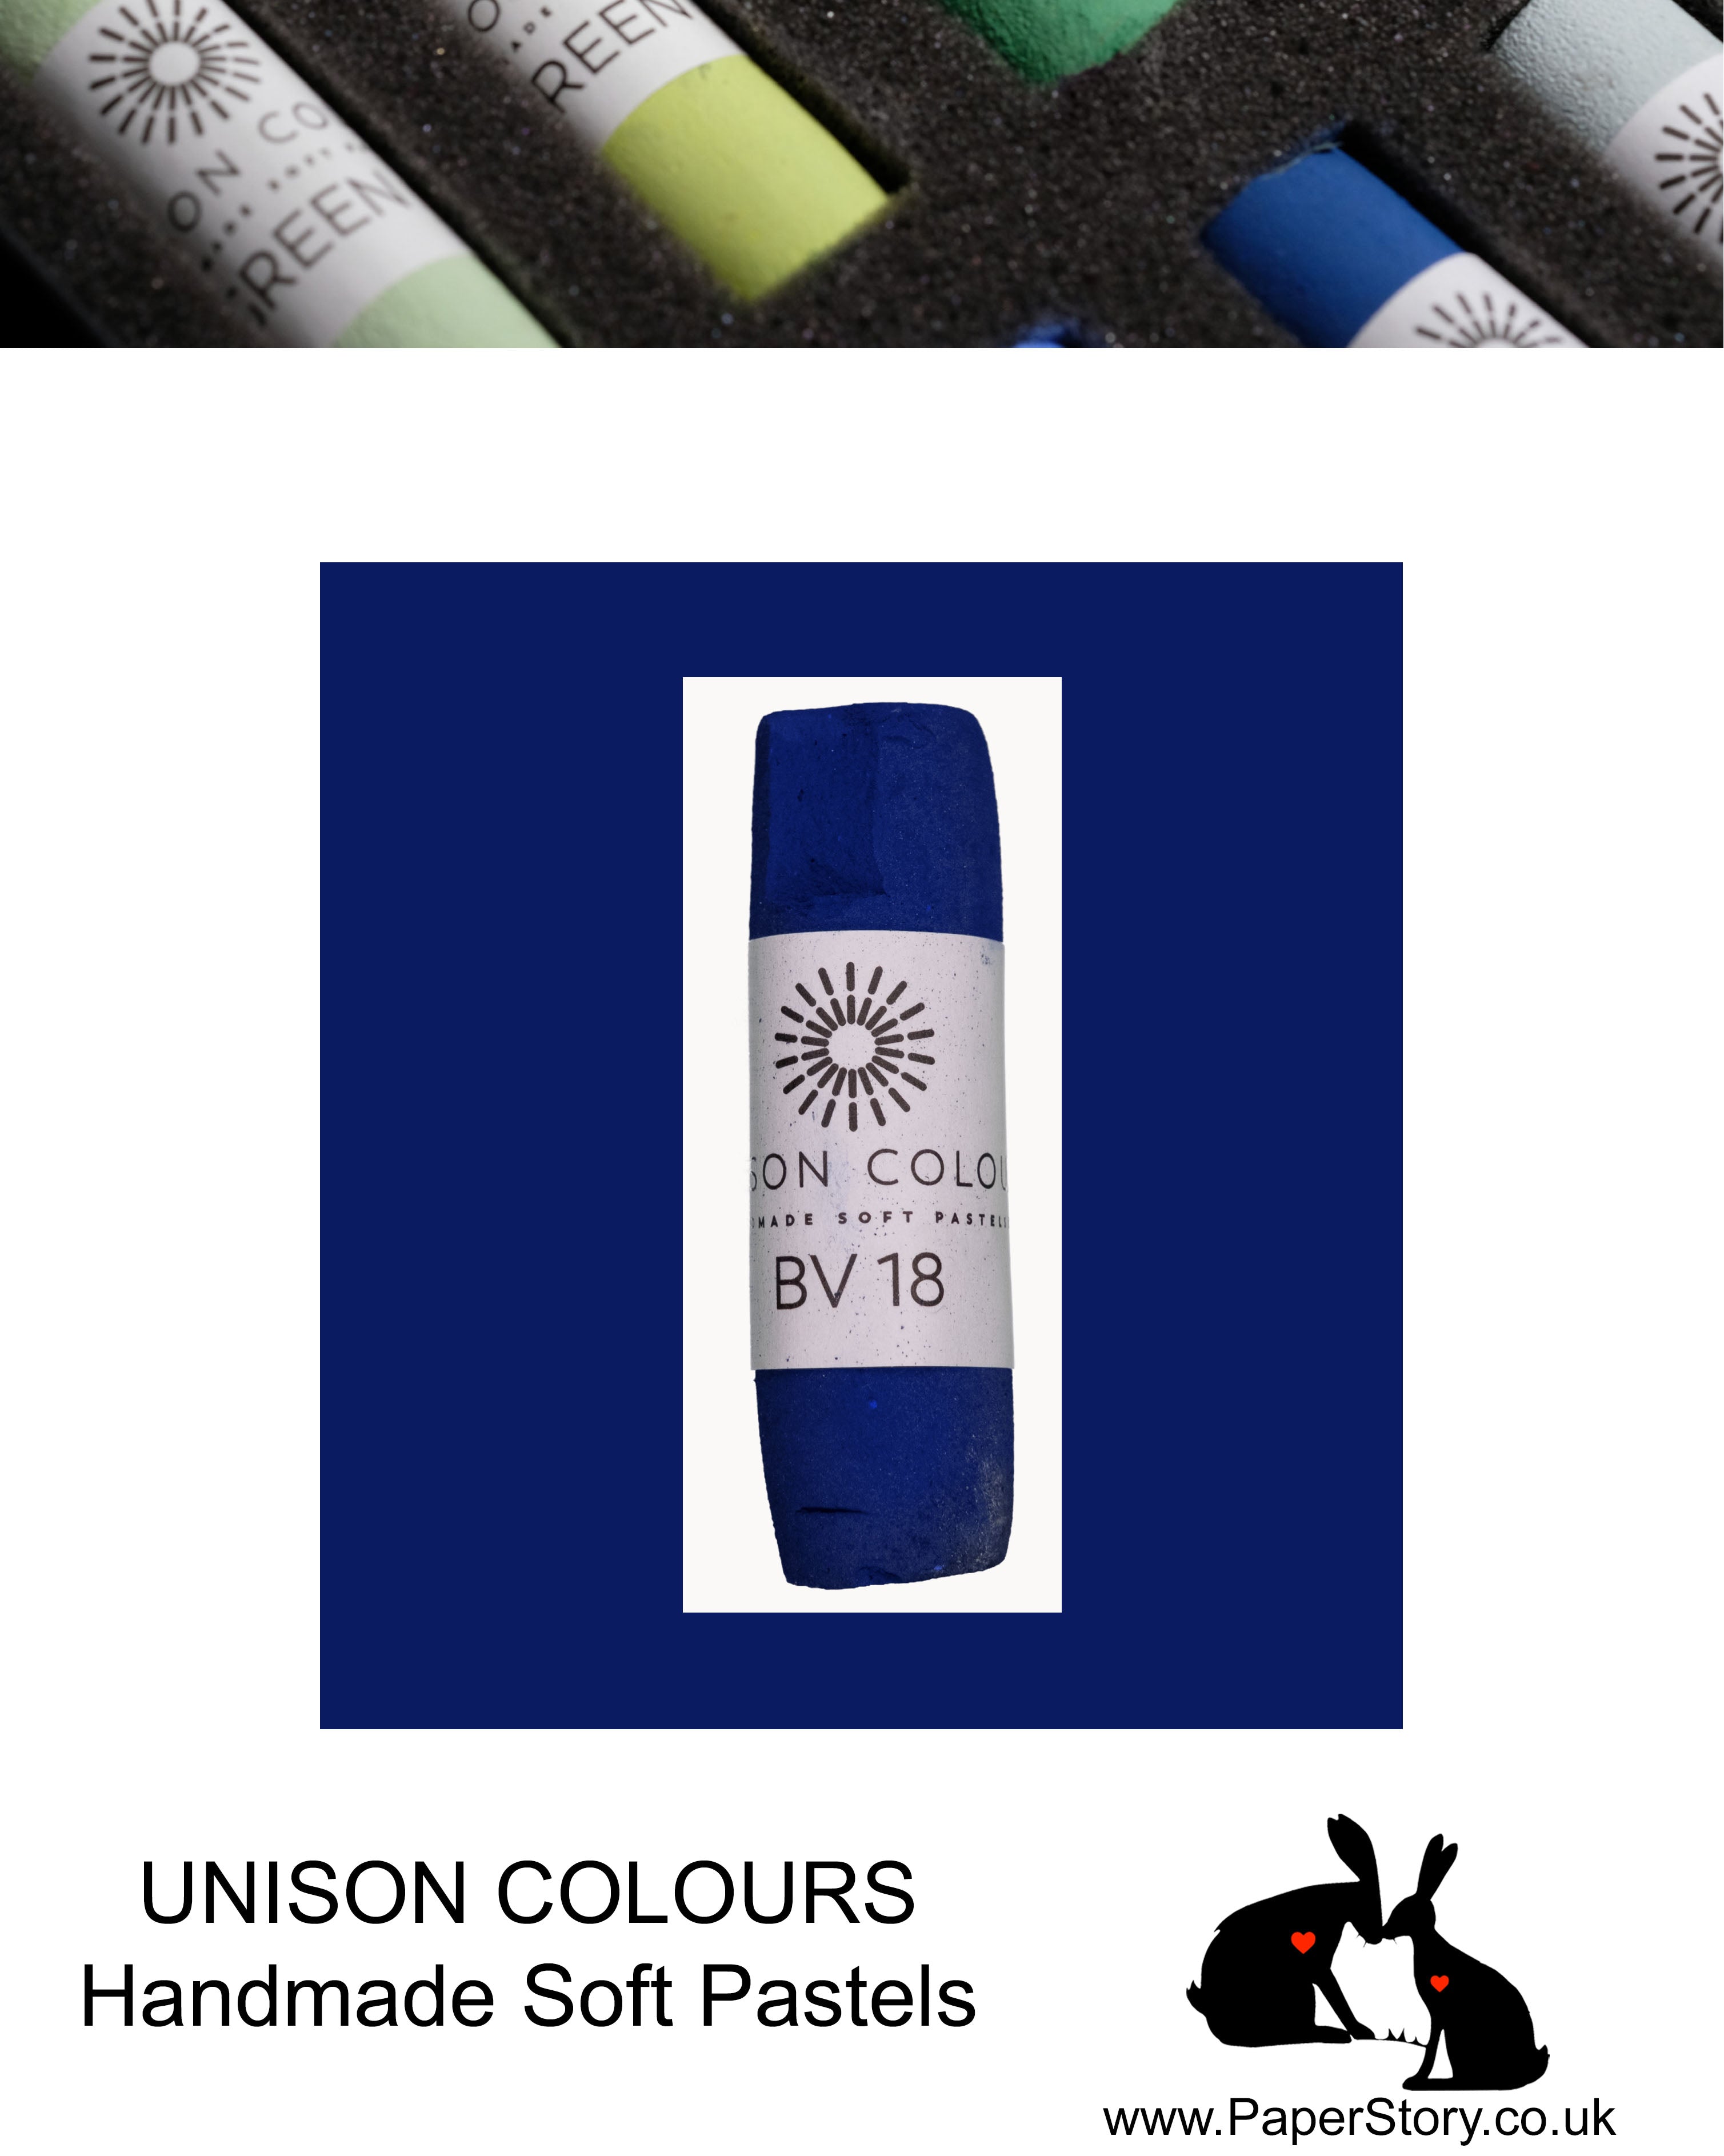 Unison Colour Handmade Soft Pastels Blue Violet 18 - Size Regular